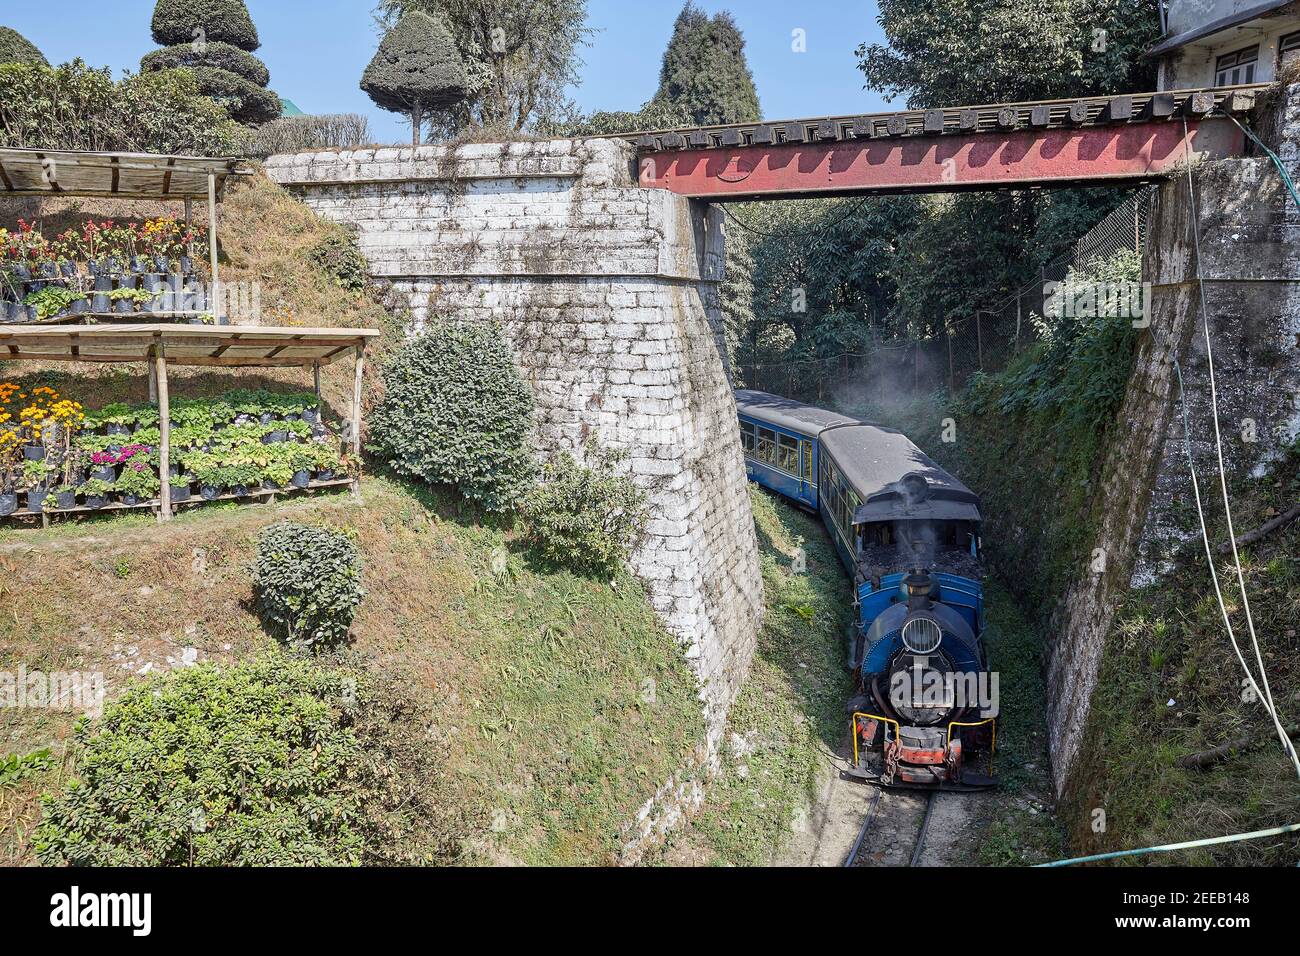 Old steam locomotive hauls a train around the Batasia Loop between Ghum (Ghoom) and Darjeeling on the Darjeeling Himalayan Railway, India.   The steam Stock Photo